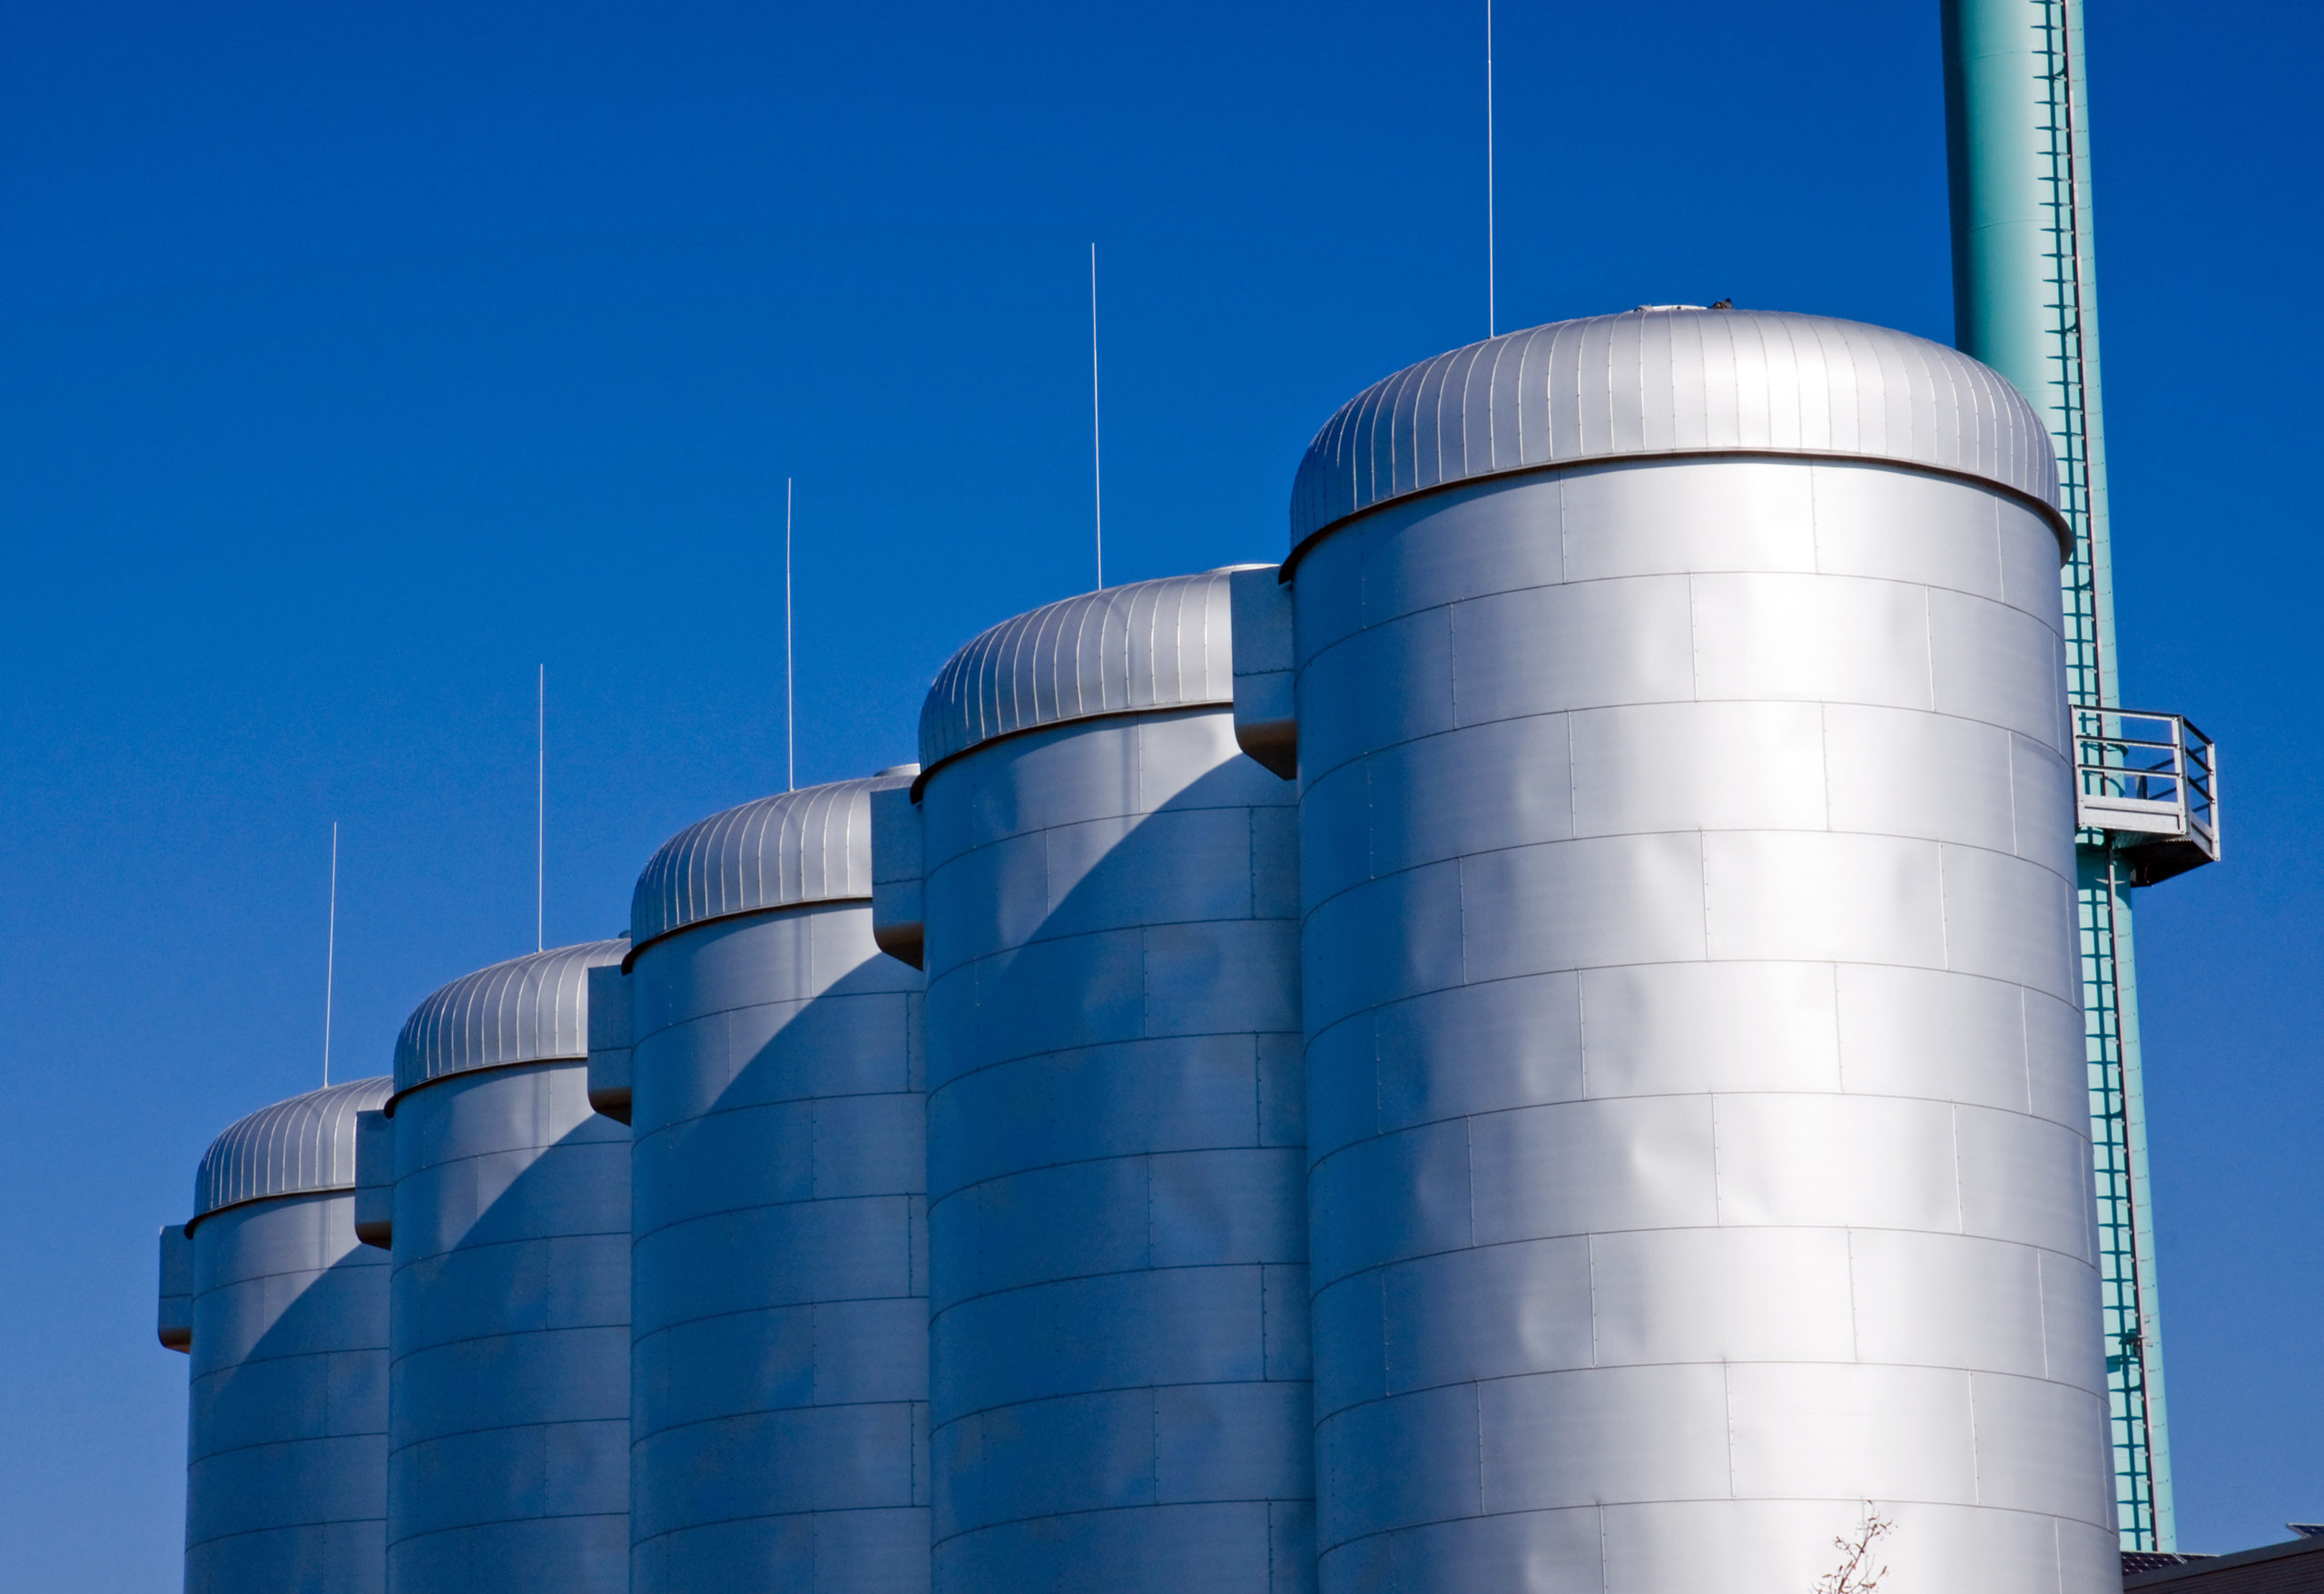 Industrial grain tanks using IoT bin level monitoring devices.